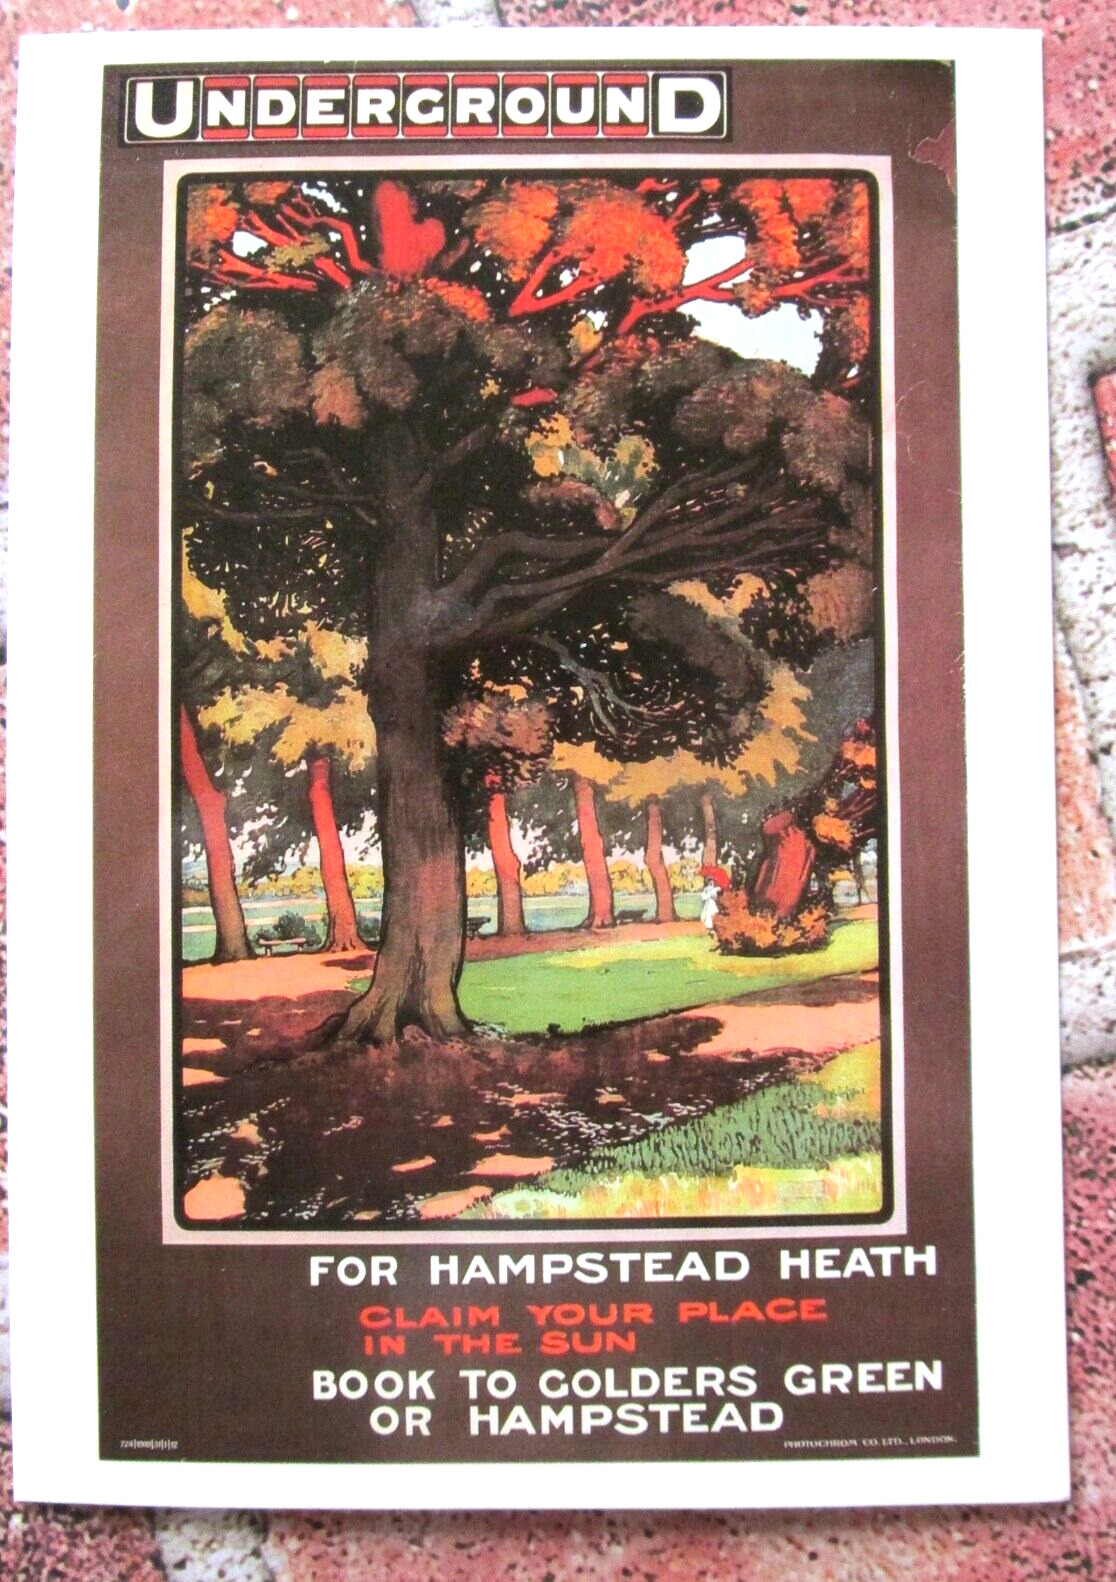 London Transport Museum Postcard Hampstead Heath by Underground Repro Poster Art